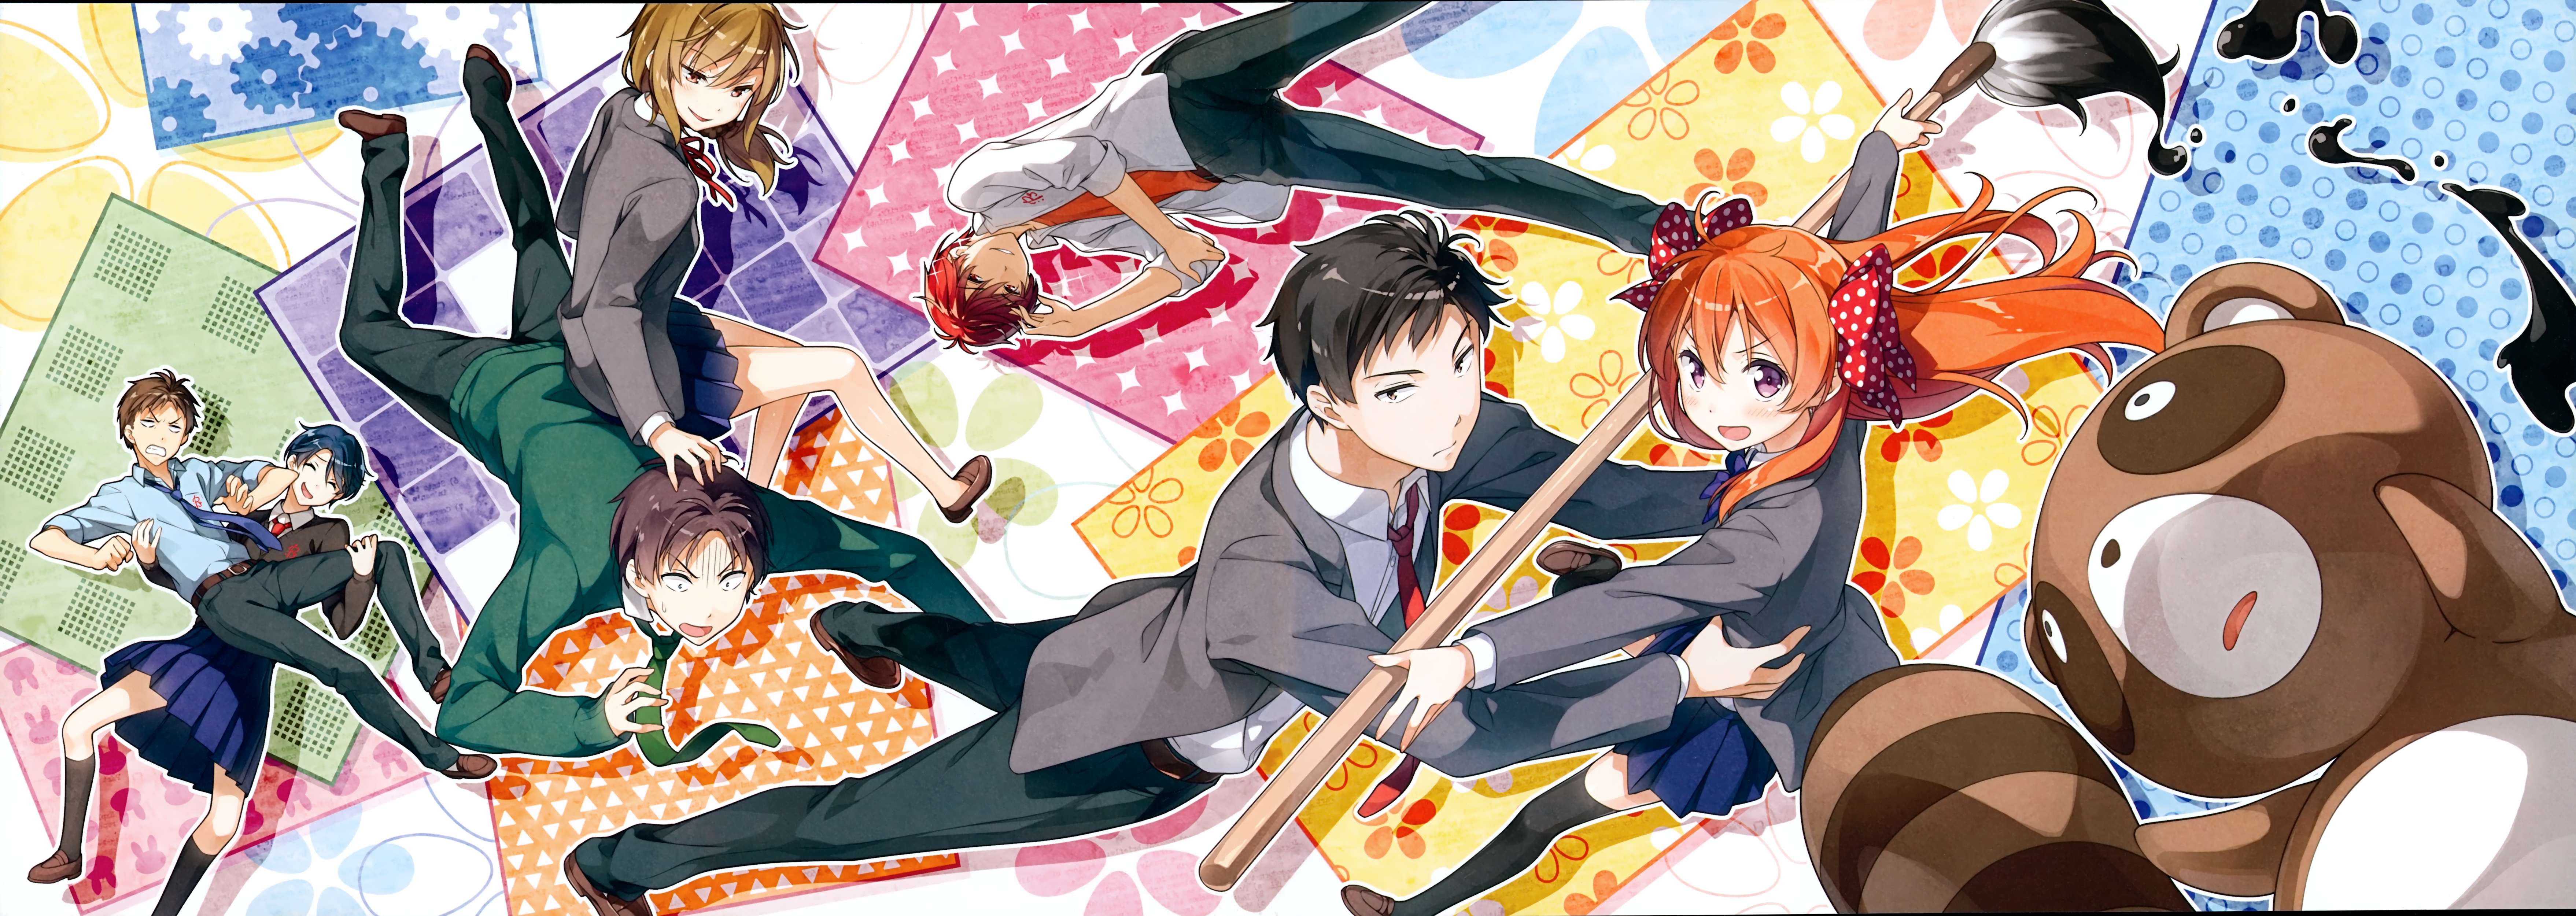 Anime Monthly Girls' Nozaki-kun Wallpaper